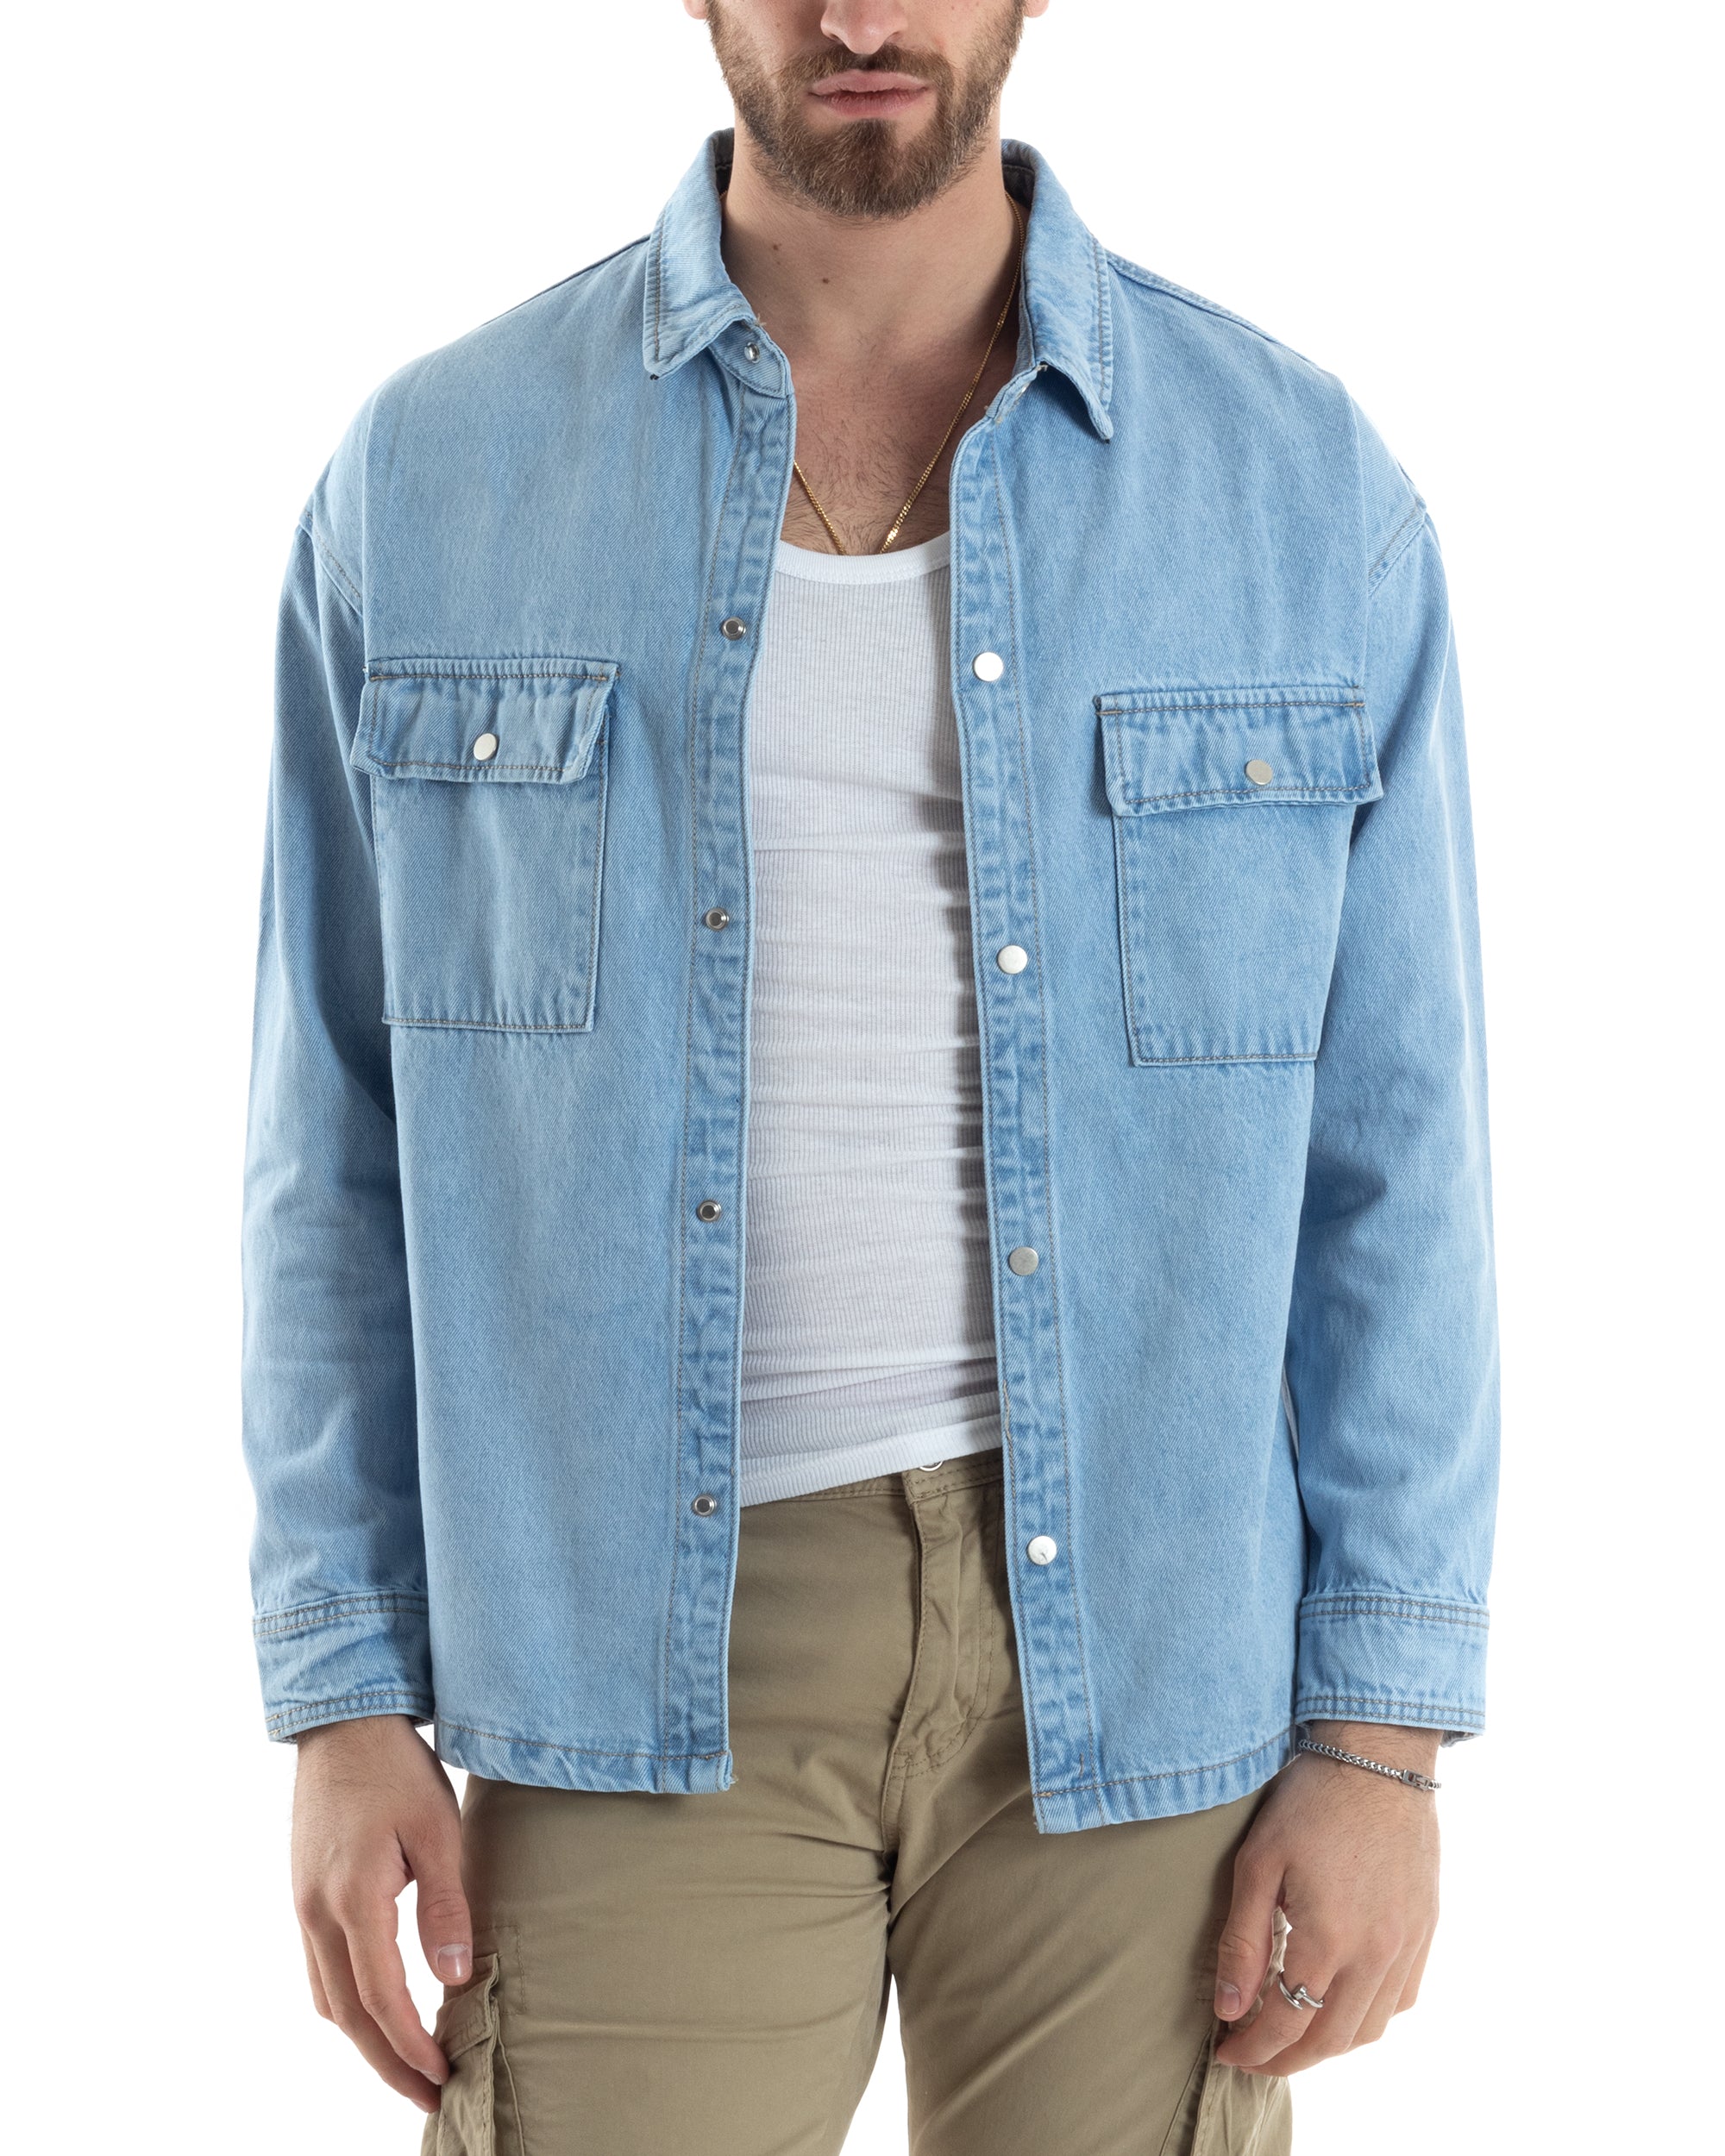 Shirt With Collar Long Sleeve Shirt Denim Jeans Jacket GIOSAL-C2653A